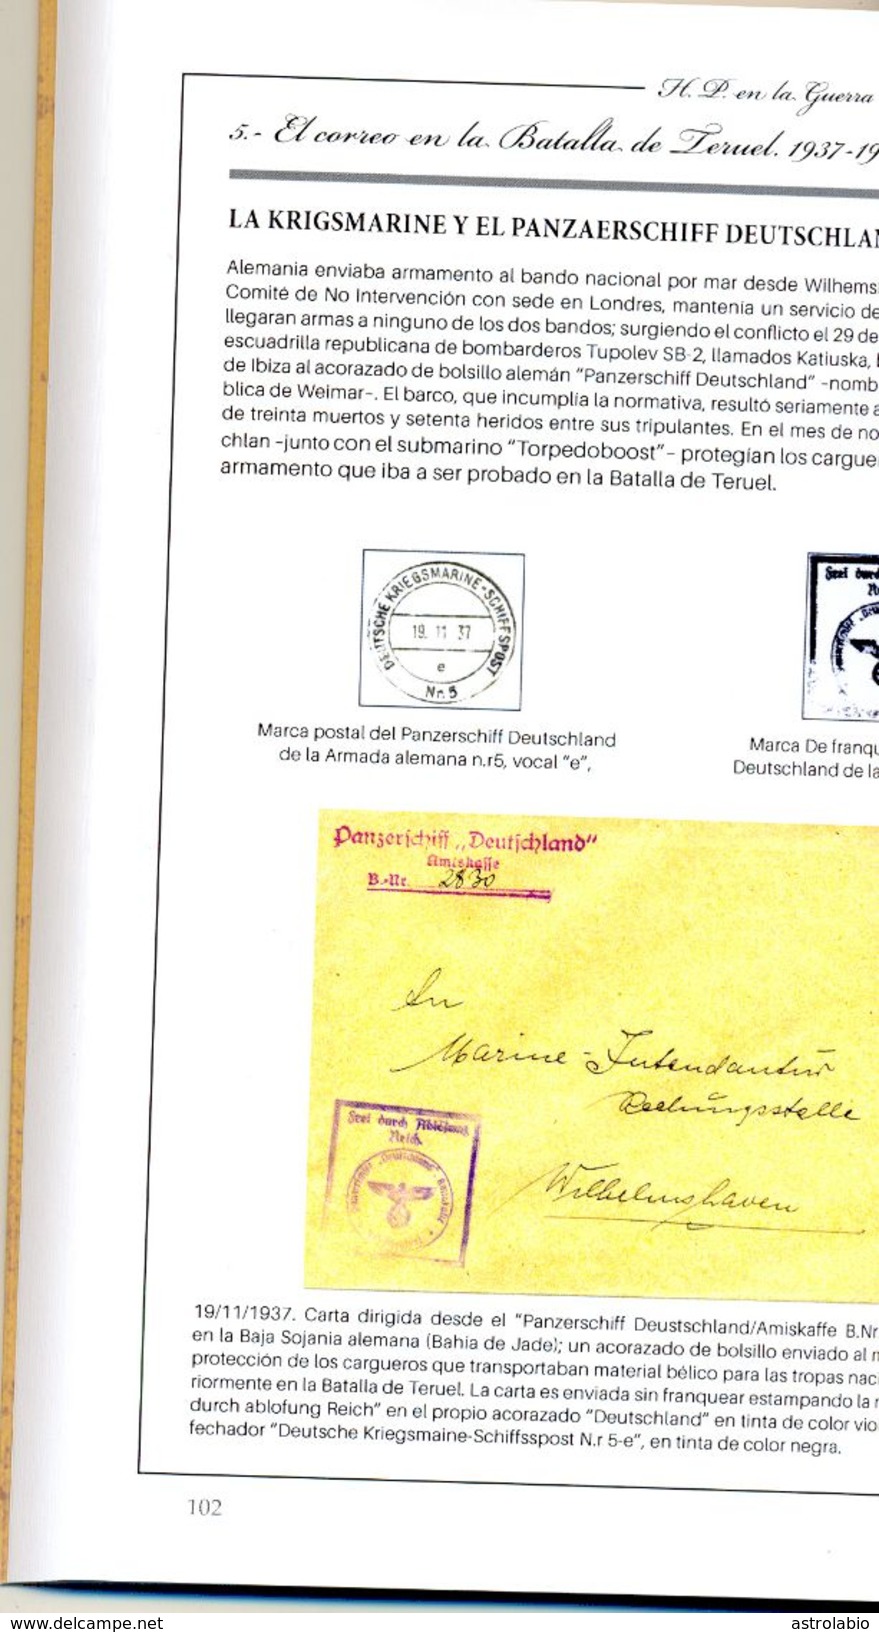 Historia Postal En La Guerra Civil Española Vol II - Teruel 1936-39  Ver 7 Scan - Poste Militaire & Histoire Postale